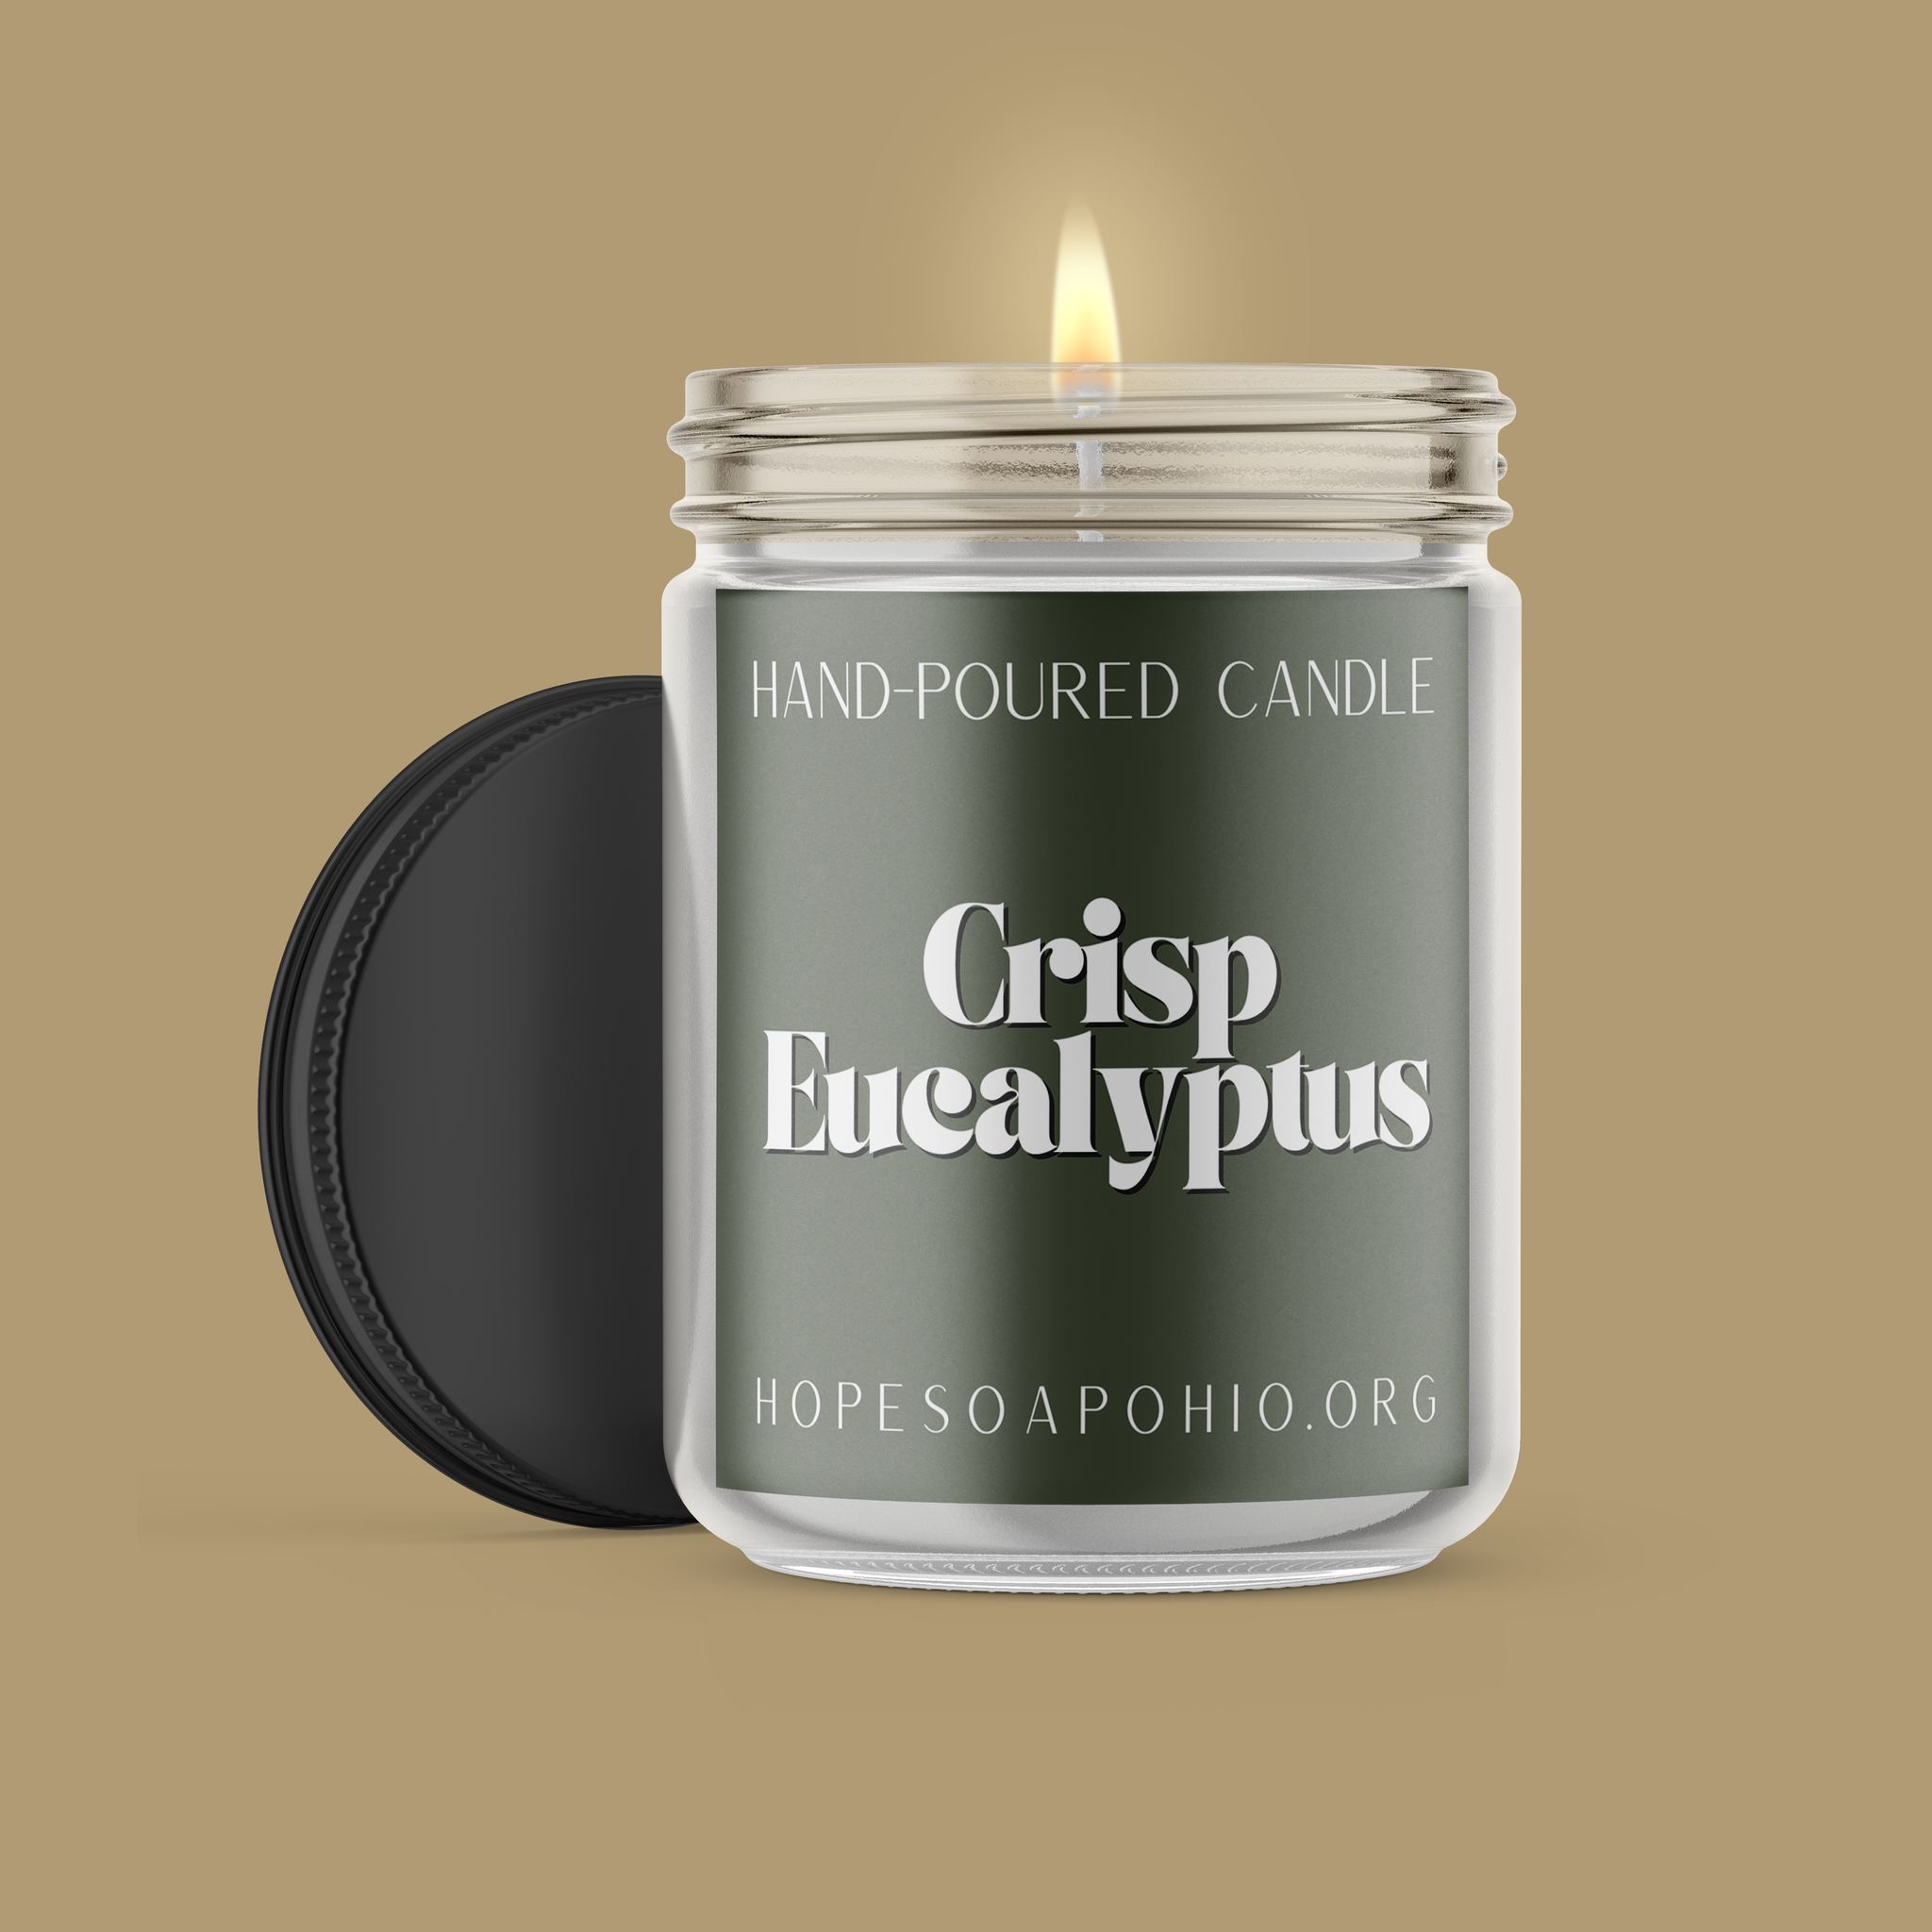 Crisp Eucalyptus Candle - HOPESOAPOHIO